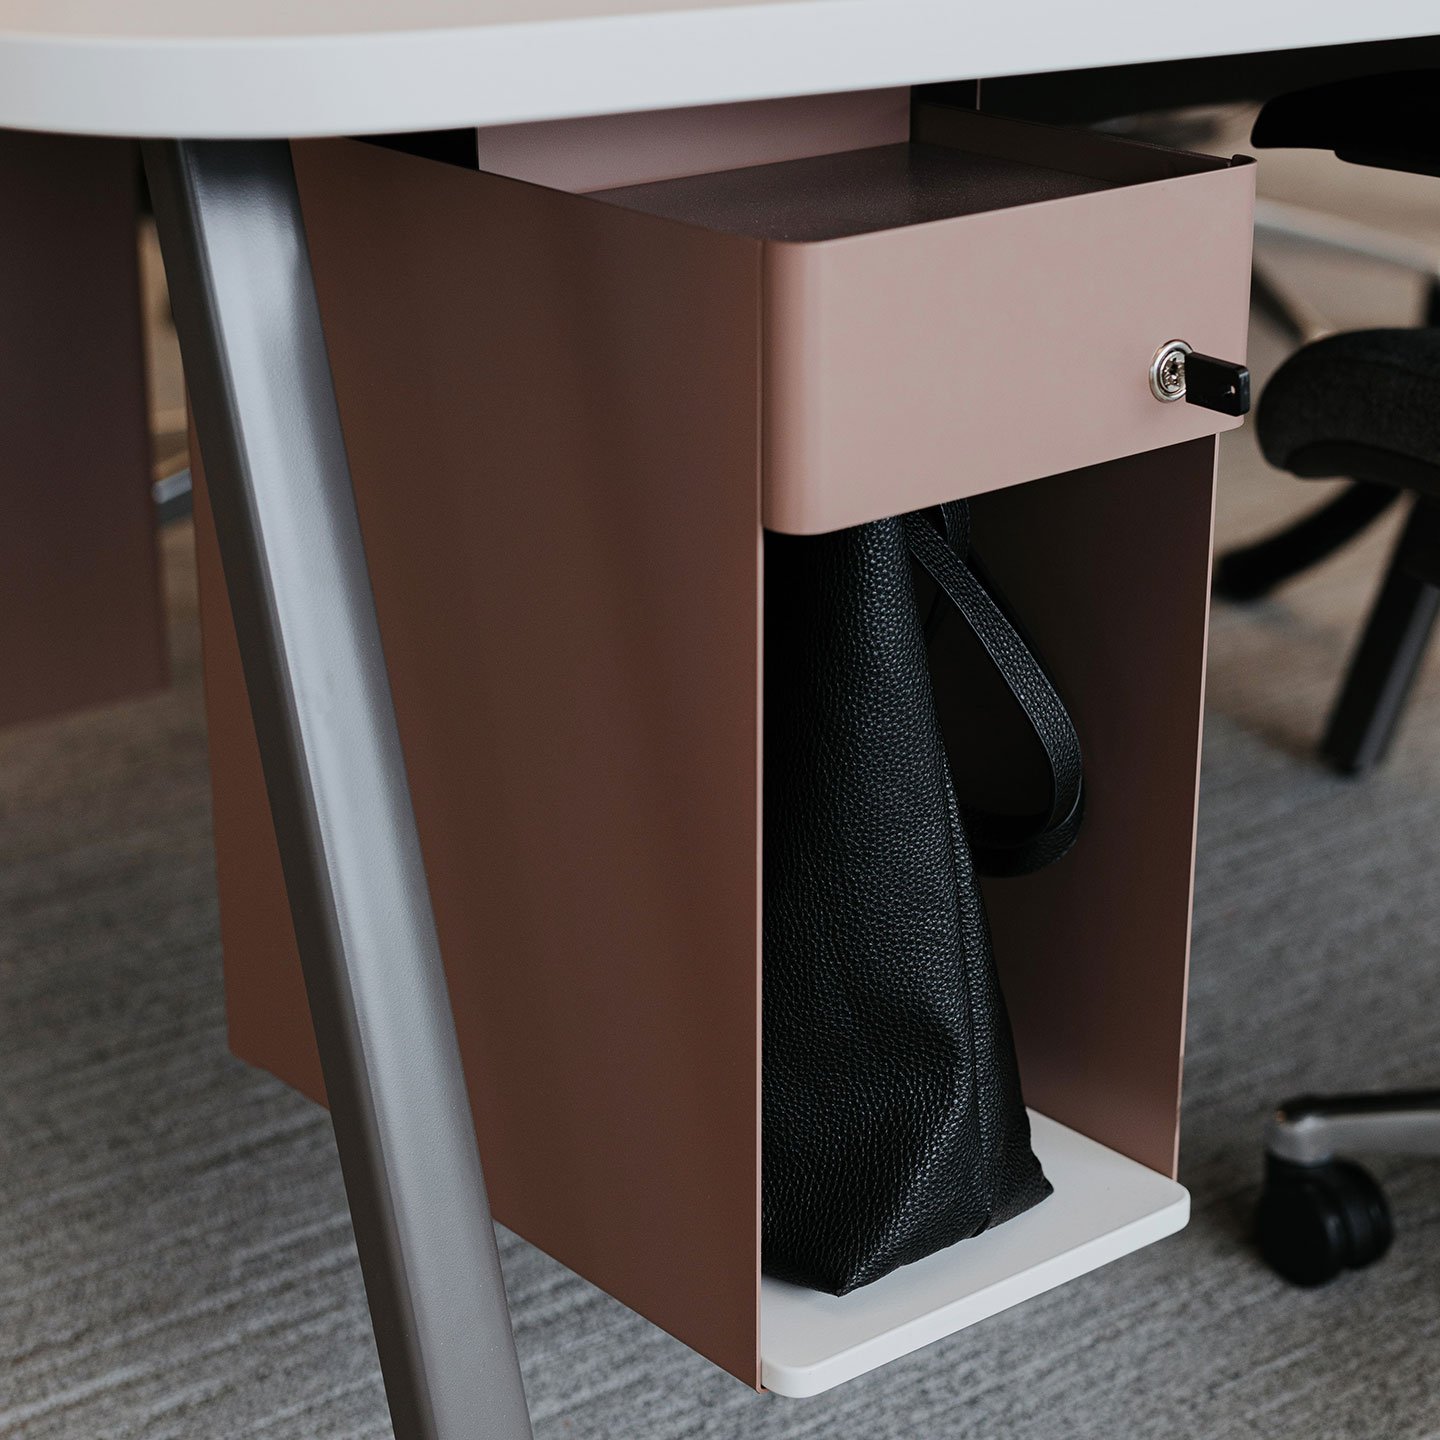 Active Components shelf and lock doors underneath individual work desk. 